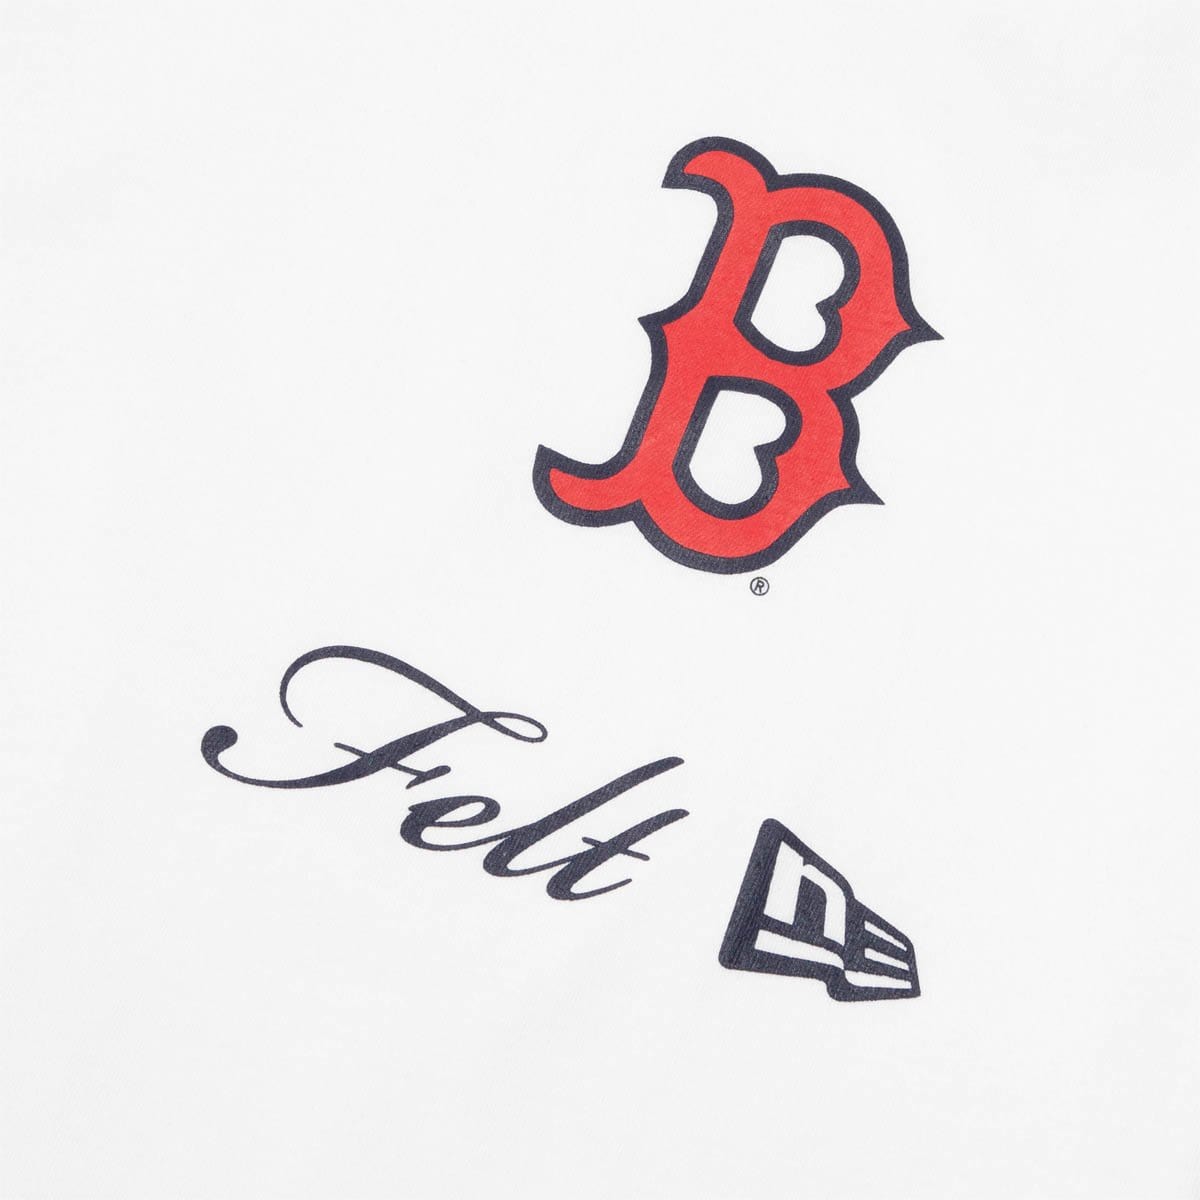 x FELT BOSTON RED SOX SHIRT White – Bodega